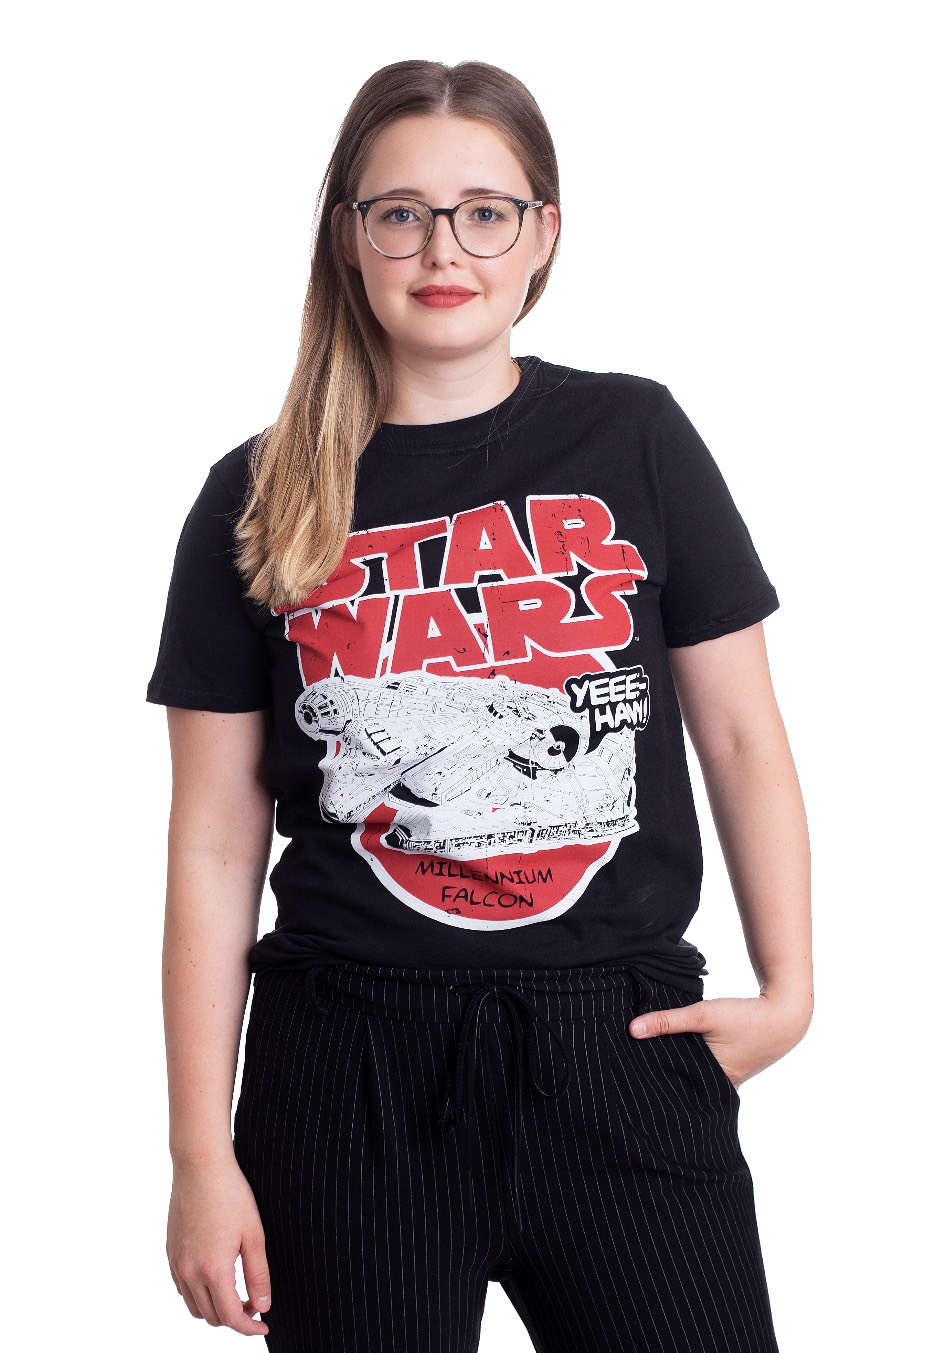 Star Wars - Millennium Falcon - - T-Shirts